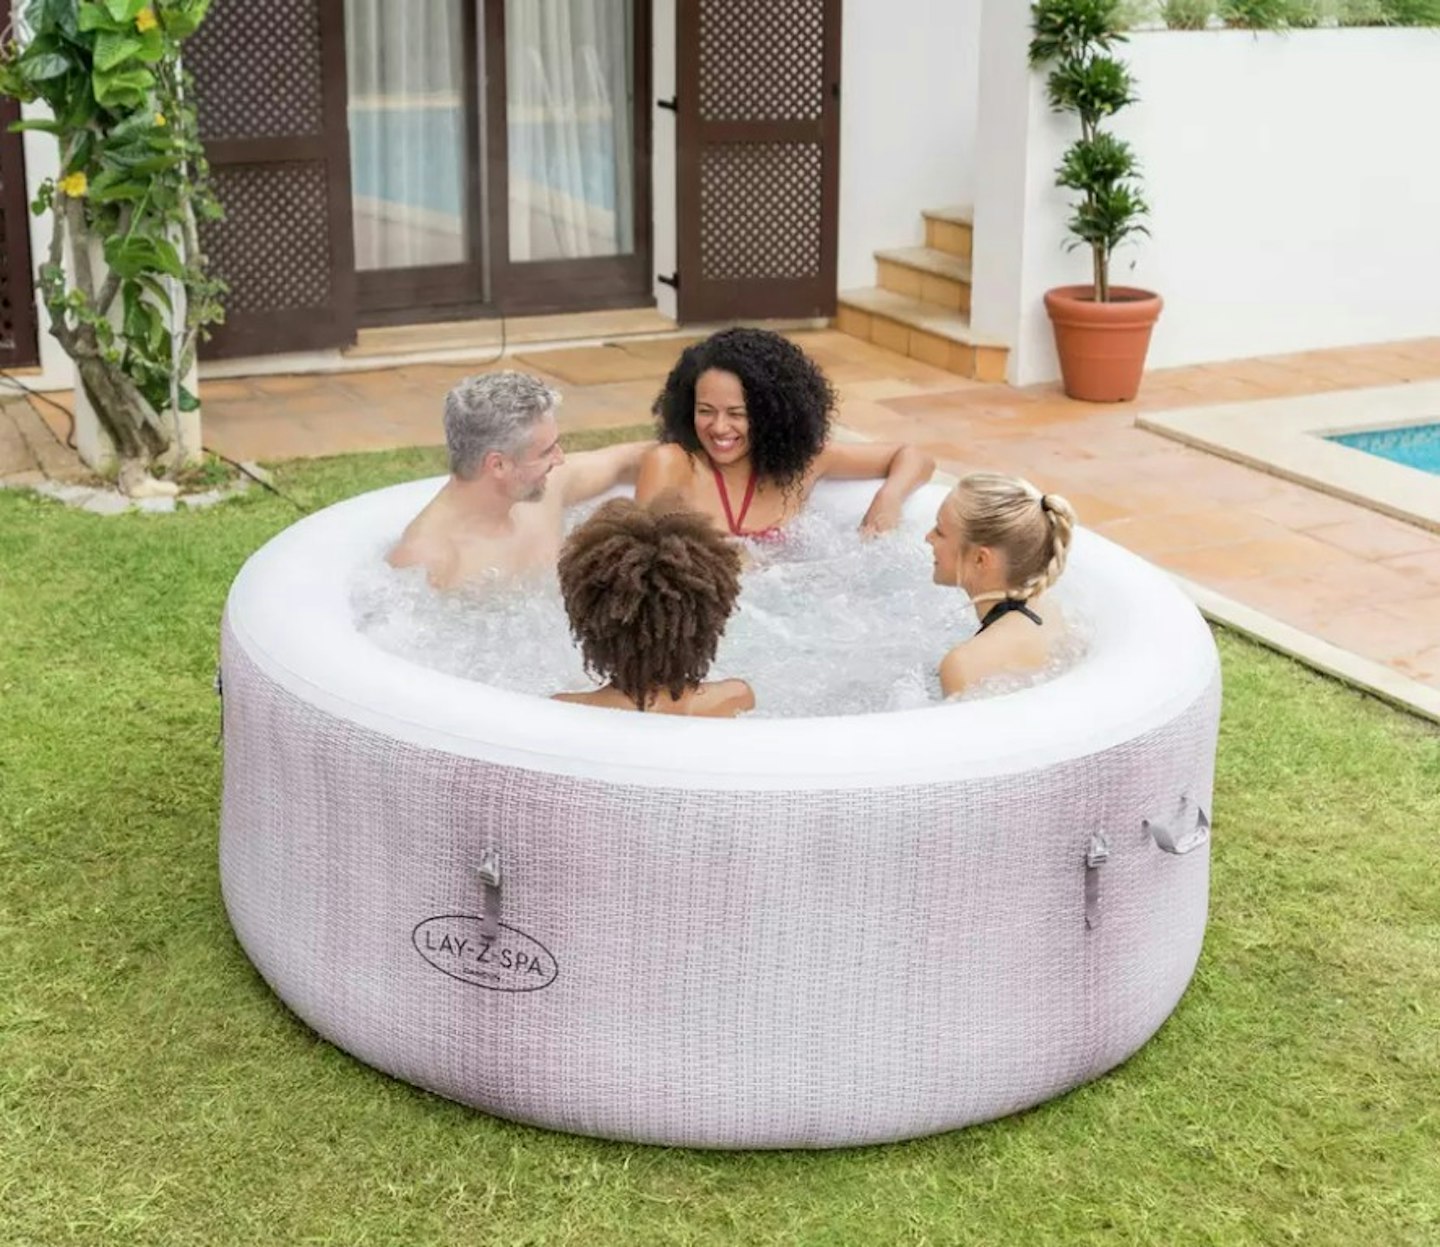 Lay-Z-Spa Cancun 4 Person Hot Tub